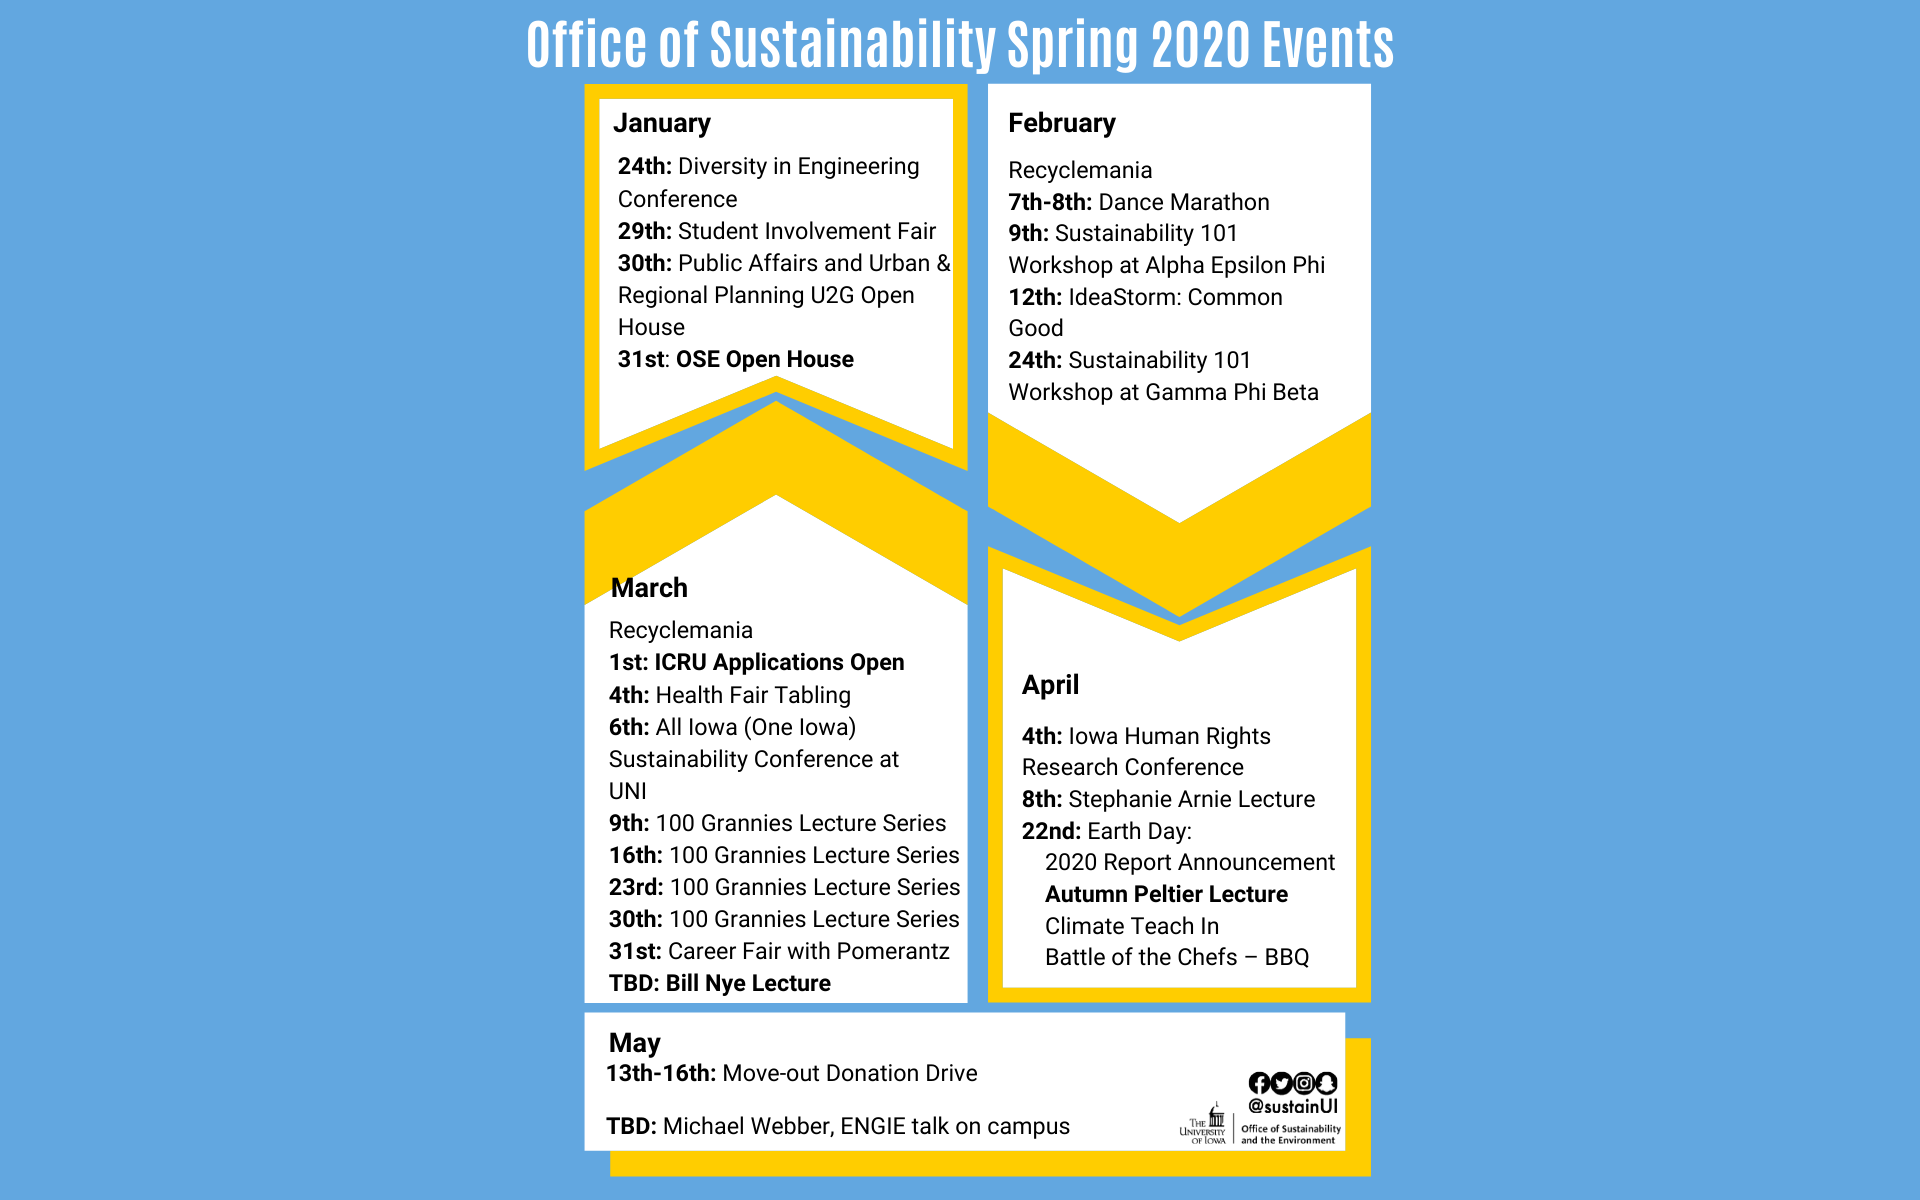 Details at https://sustainability.uiowa.edu/events/month/2020-01-01